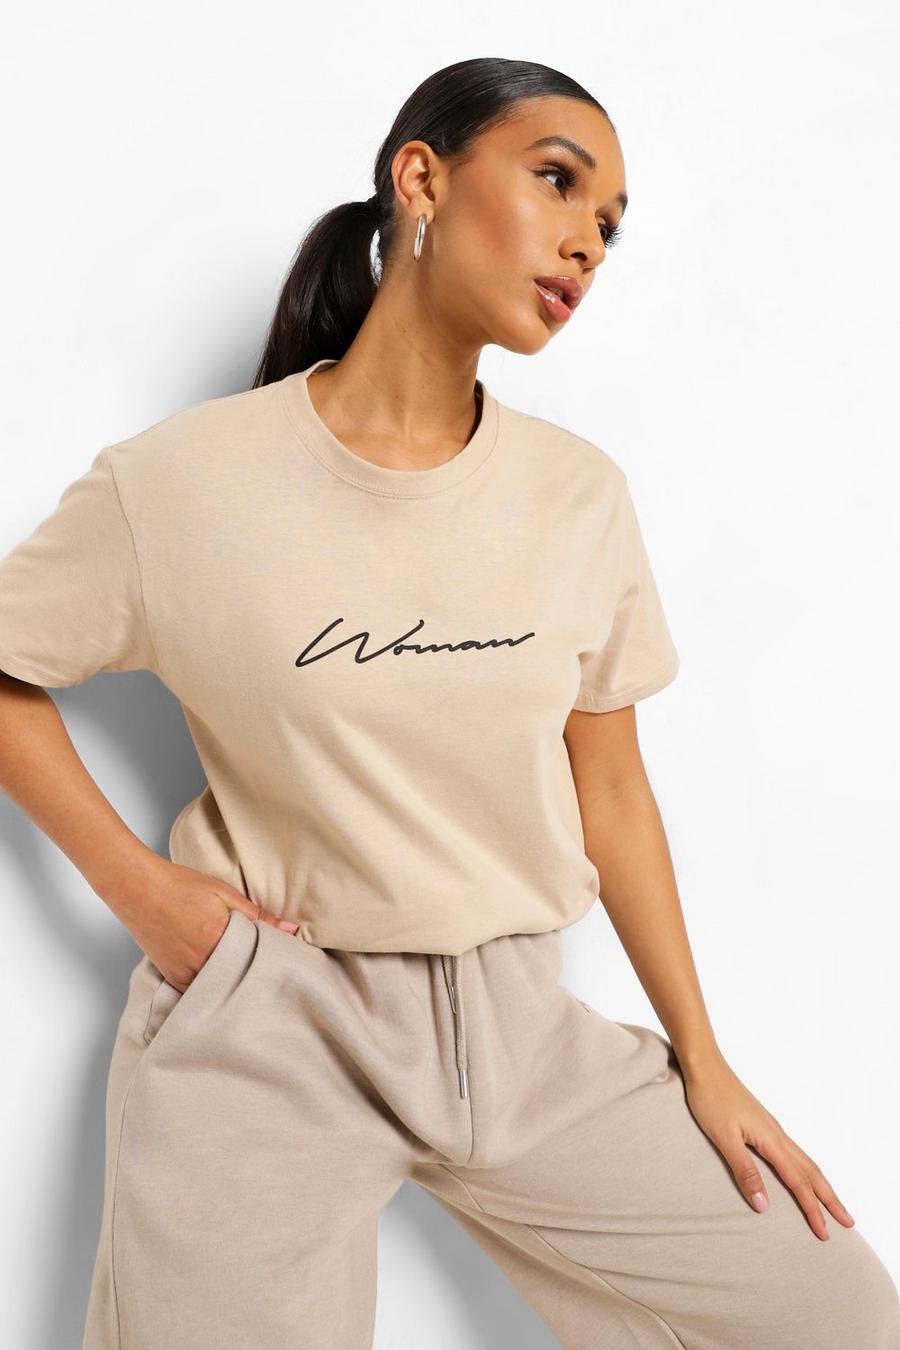 Camiseta con firma “Woman”, Marrón tostado image number 1